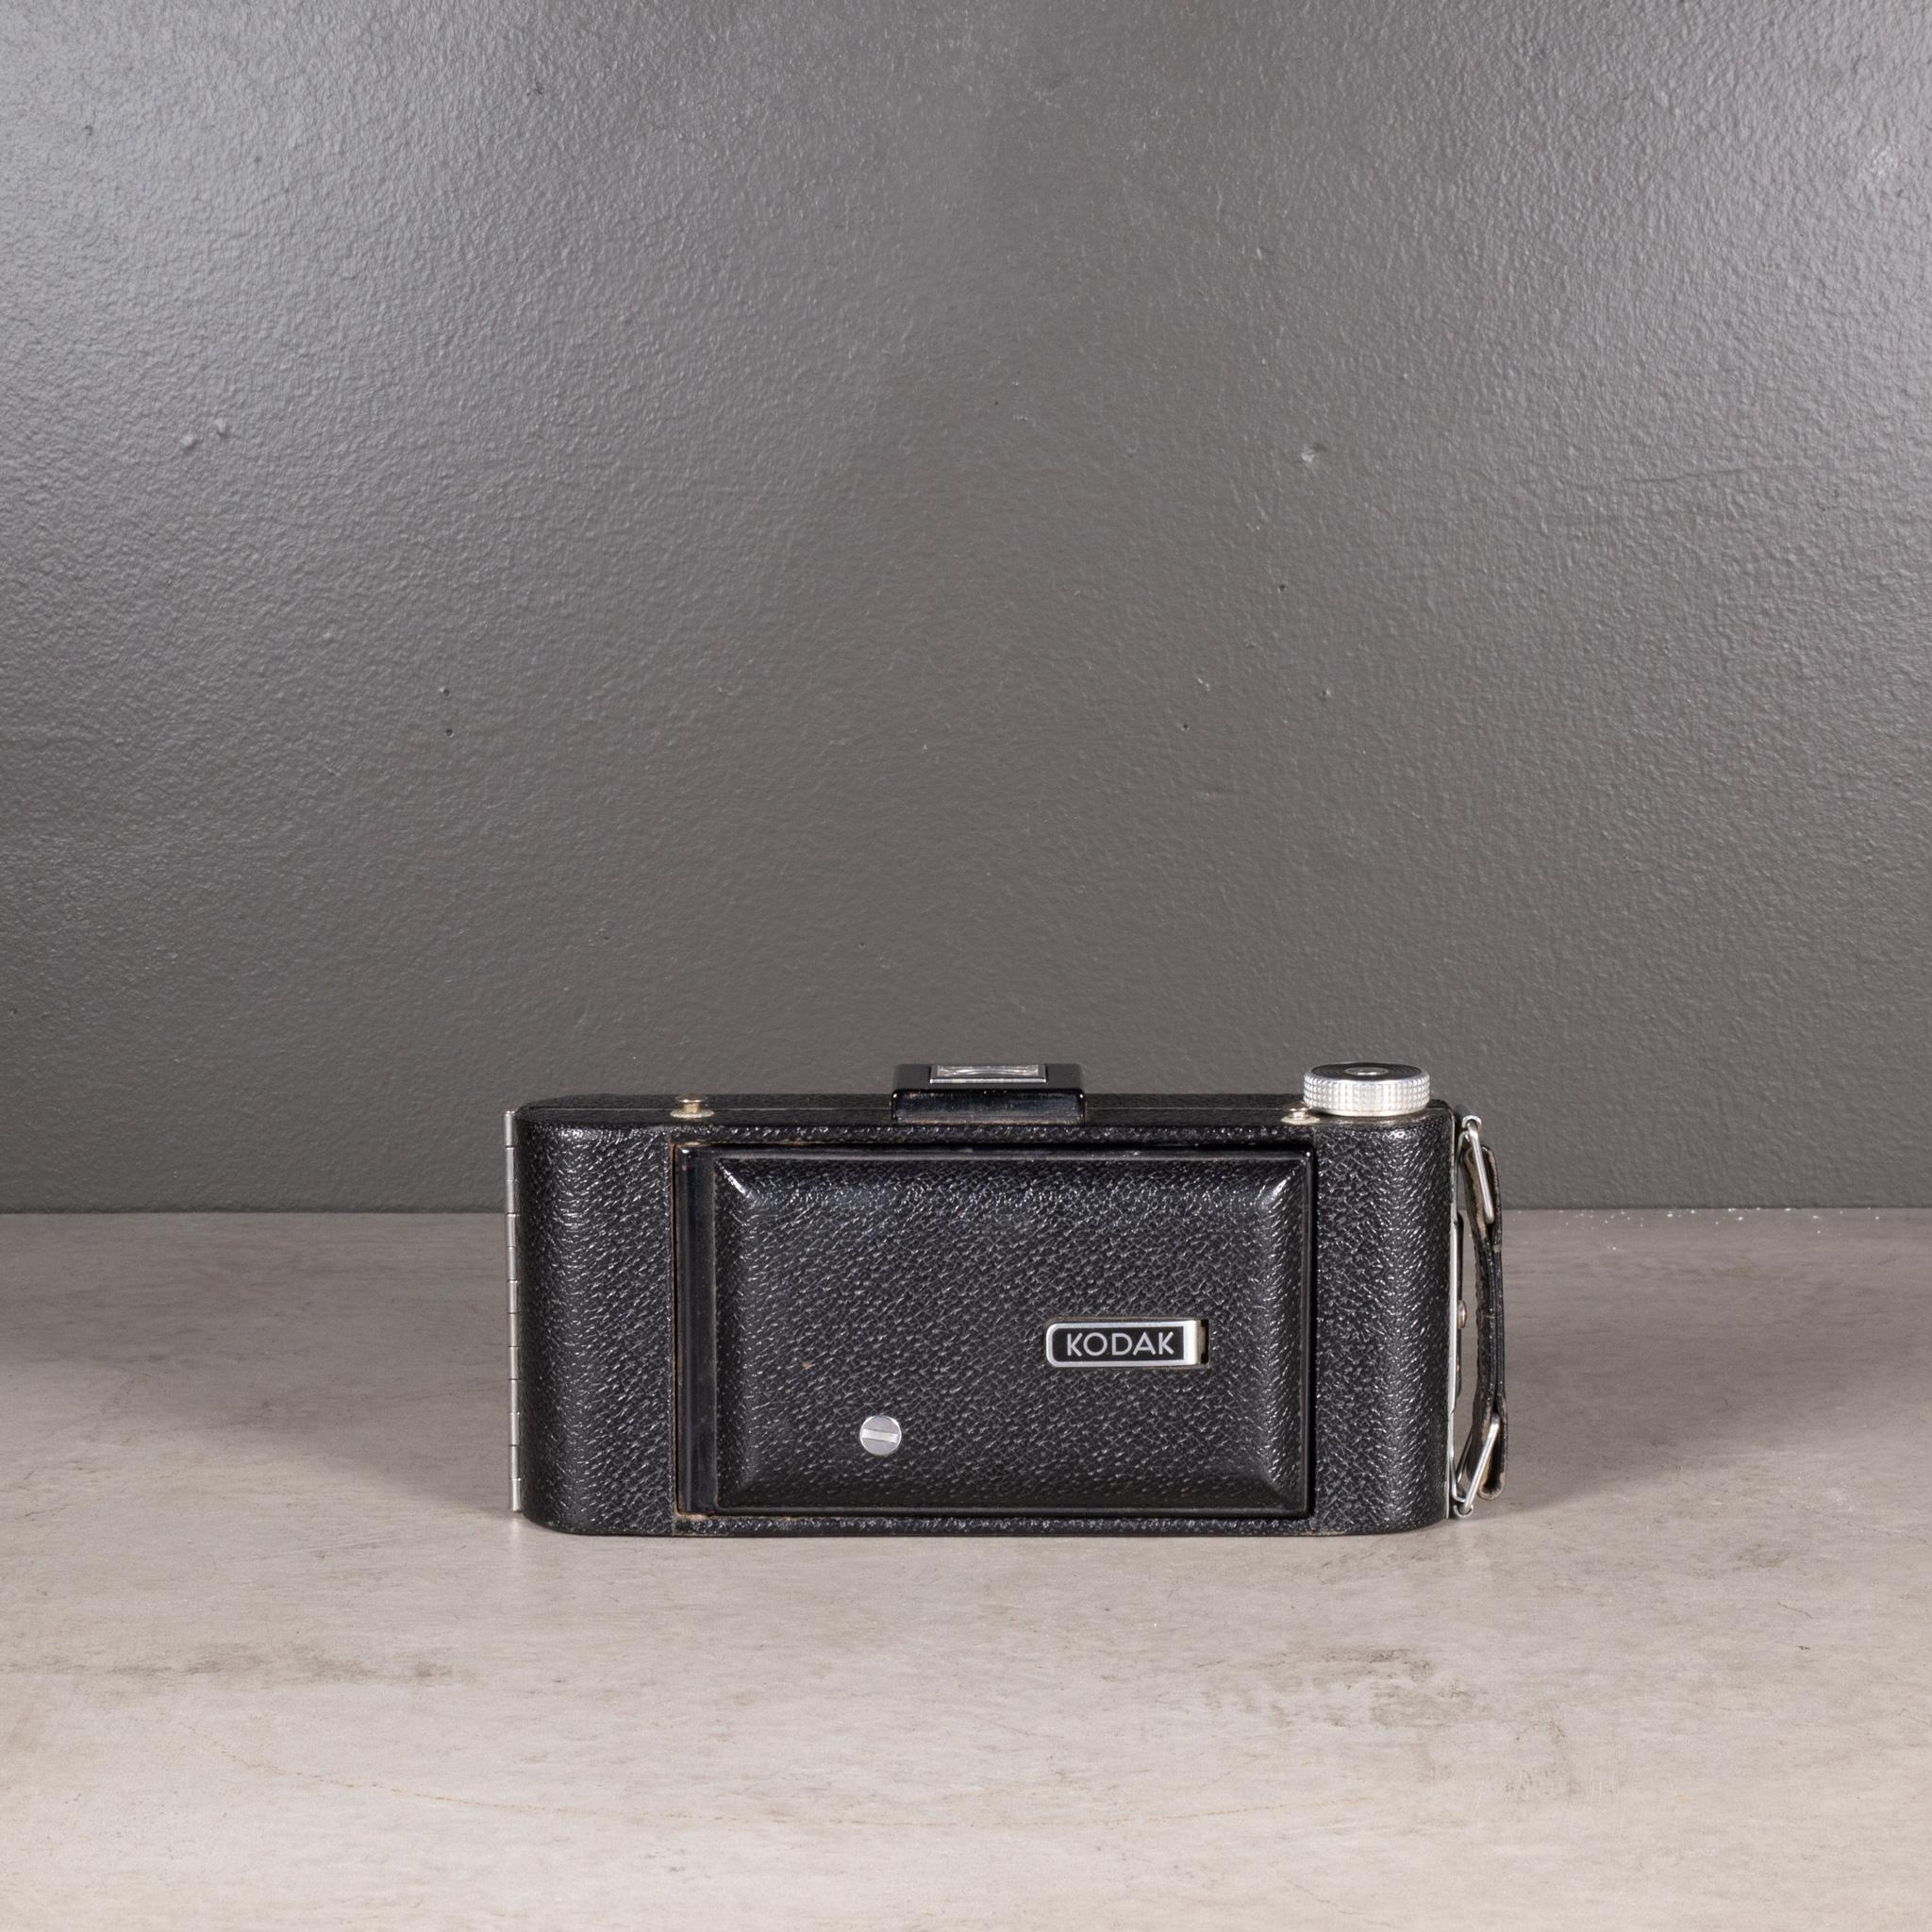 20th Century Art Deco Kodak Senior Six-16 Folding Camera c.1937-1939 (FREE SHIPPING) For Sale